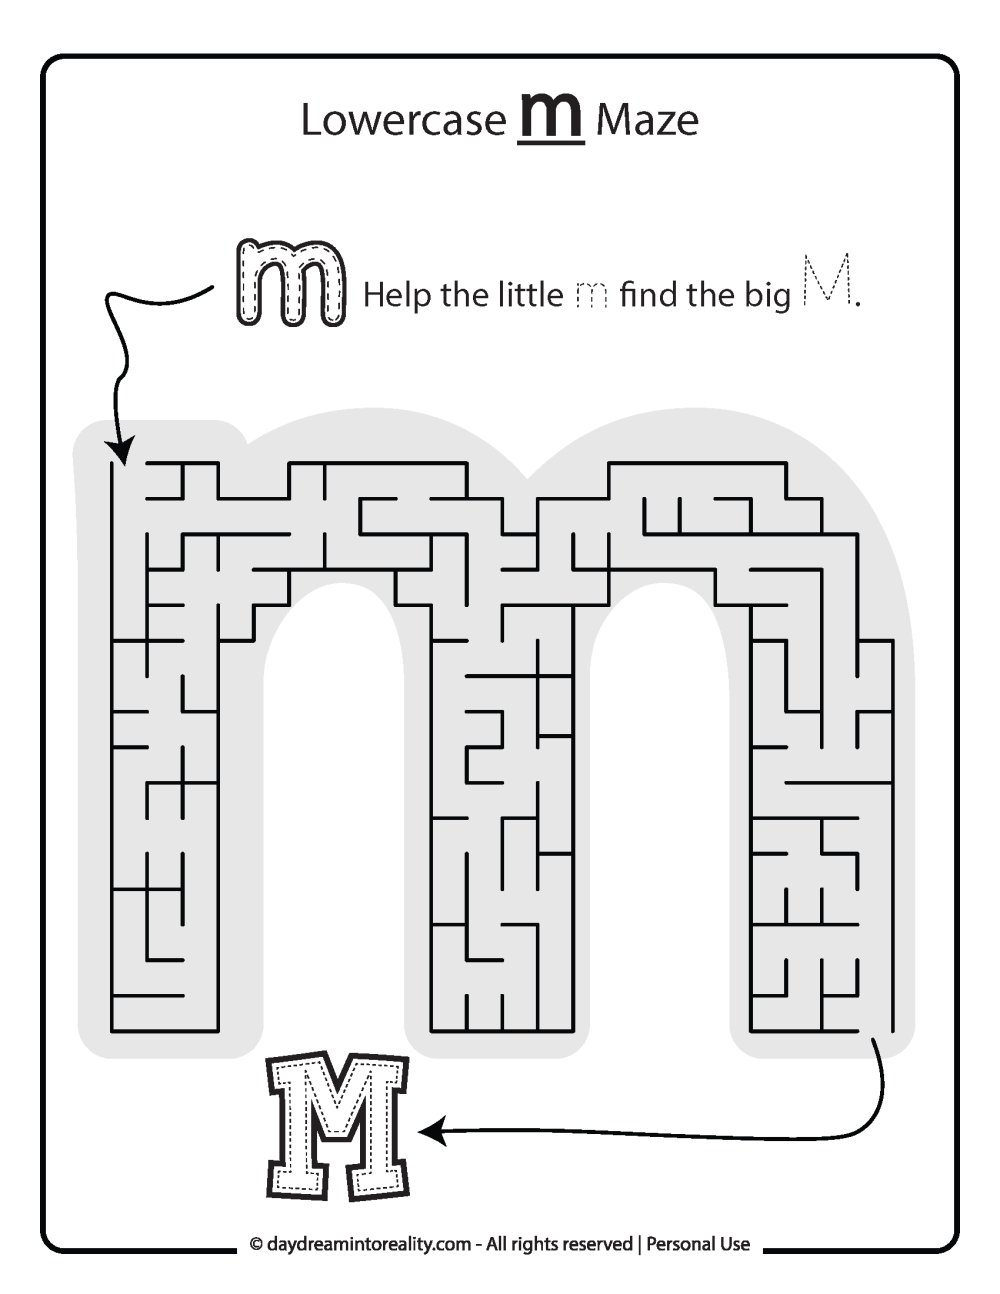 Lowercase "m" Maze Free Printable